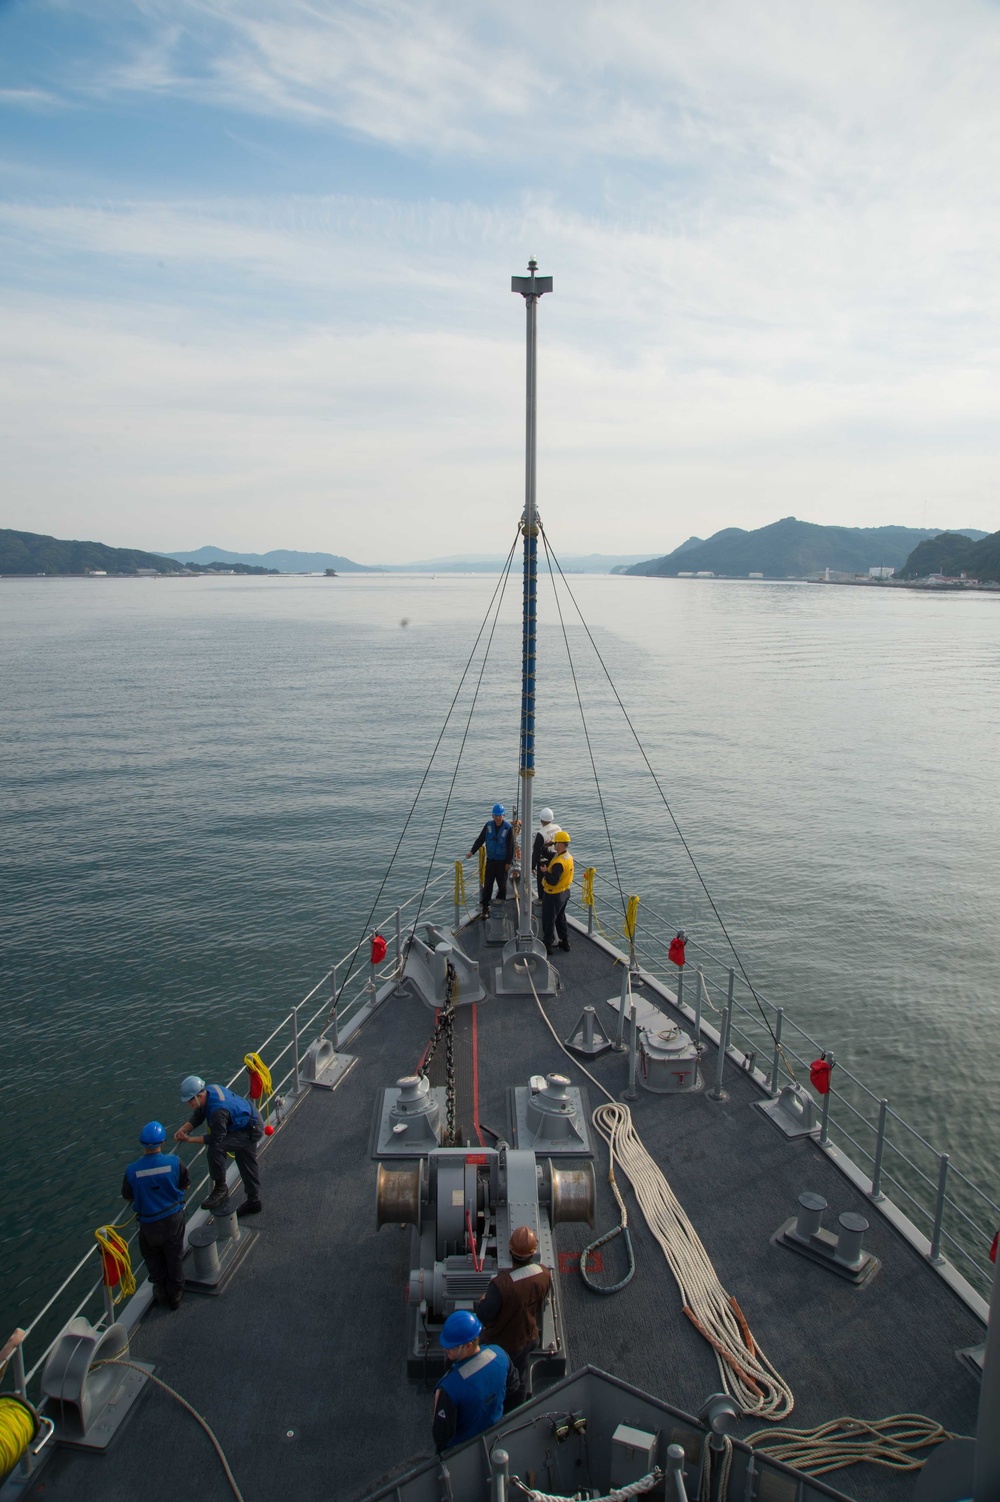 USS Chief departs for 3JA